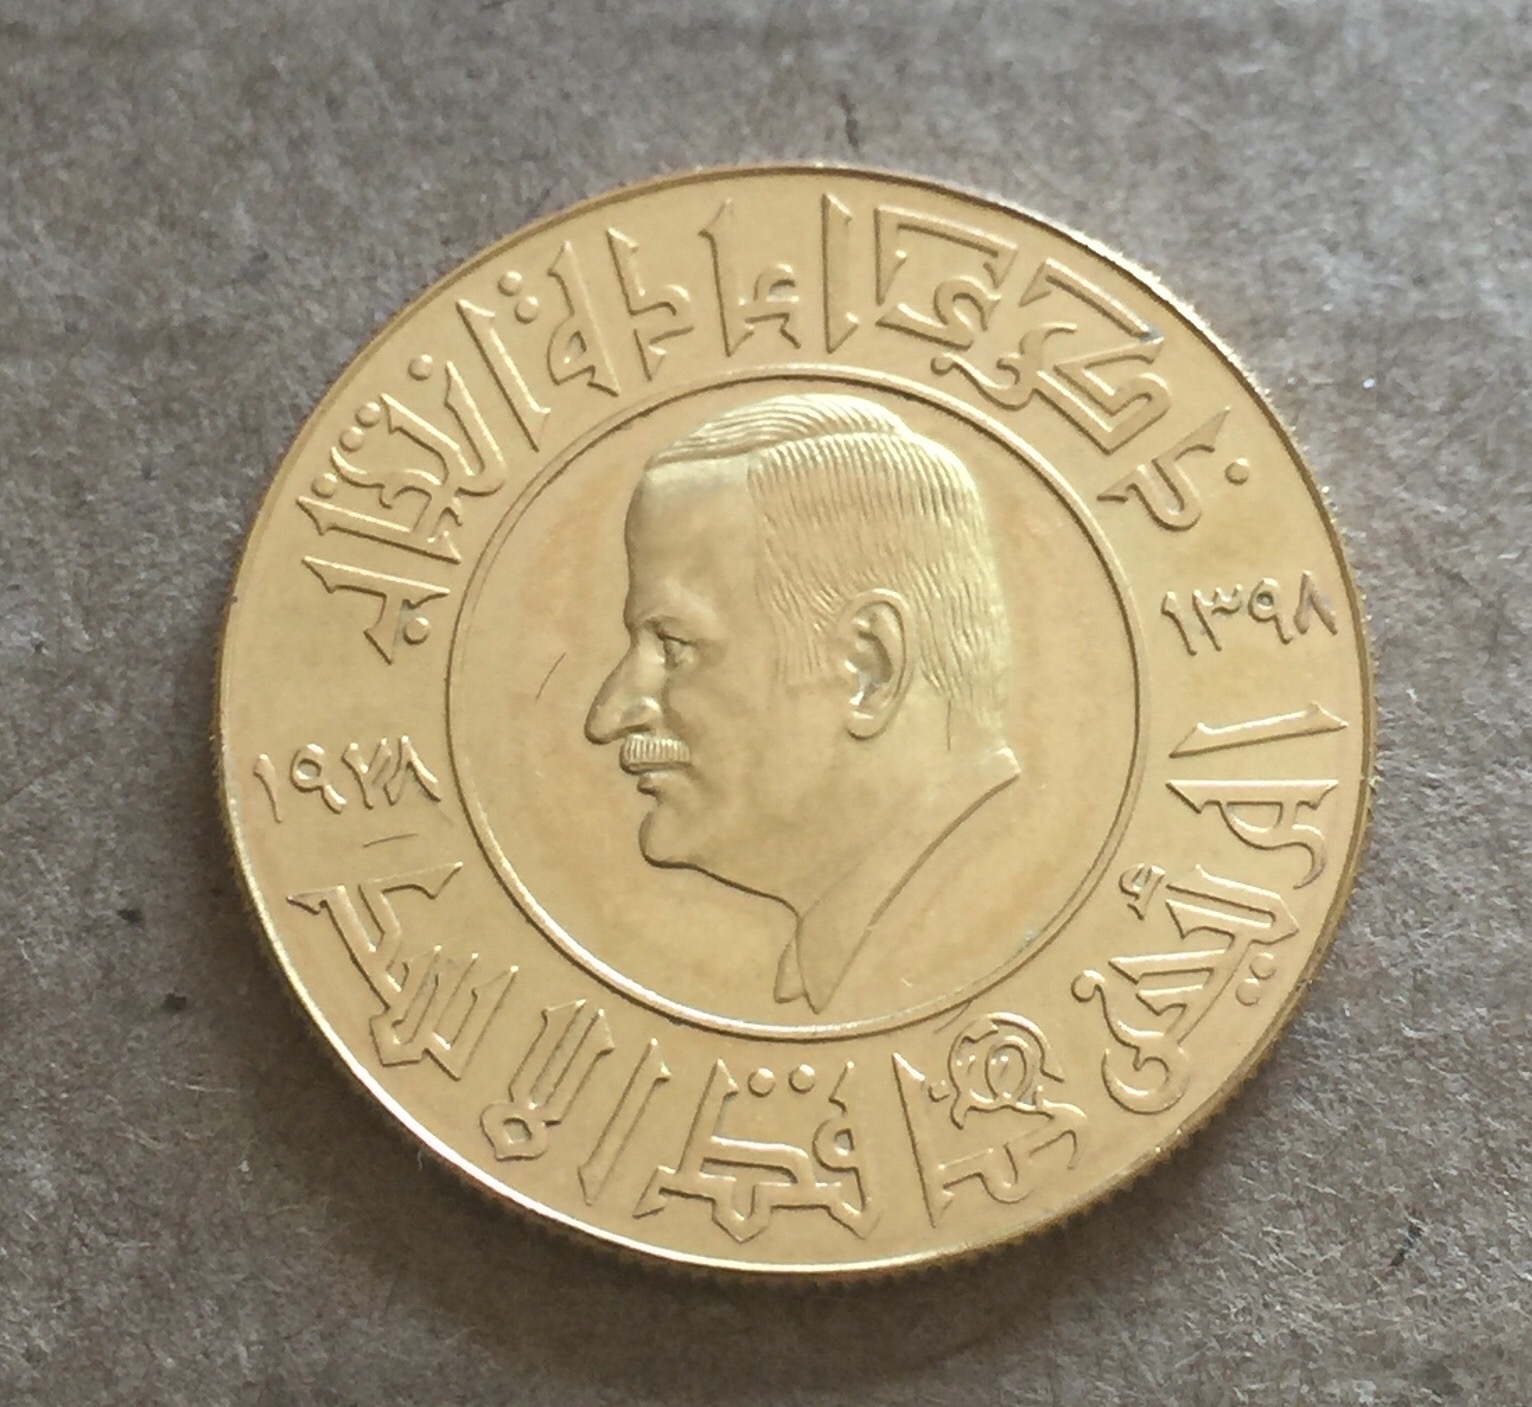 1978 Syria Gold Token Medal Re-election of President Hafez Assad 8 Grams مسكوكة ذهبية بمناسبة اعادة انتخاب حافظ الاسد 